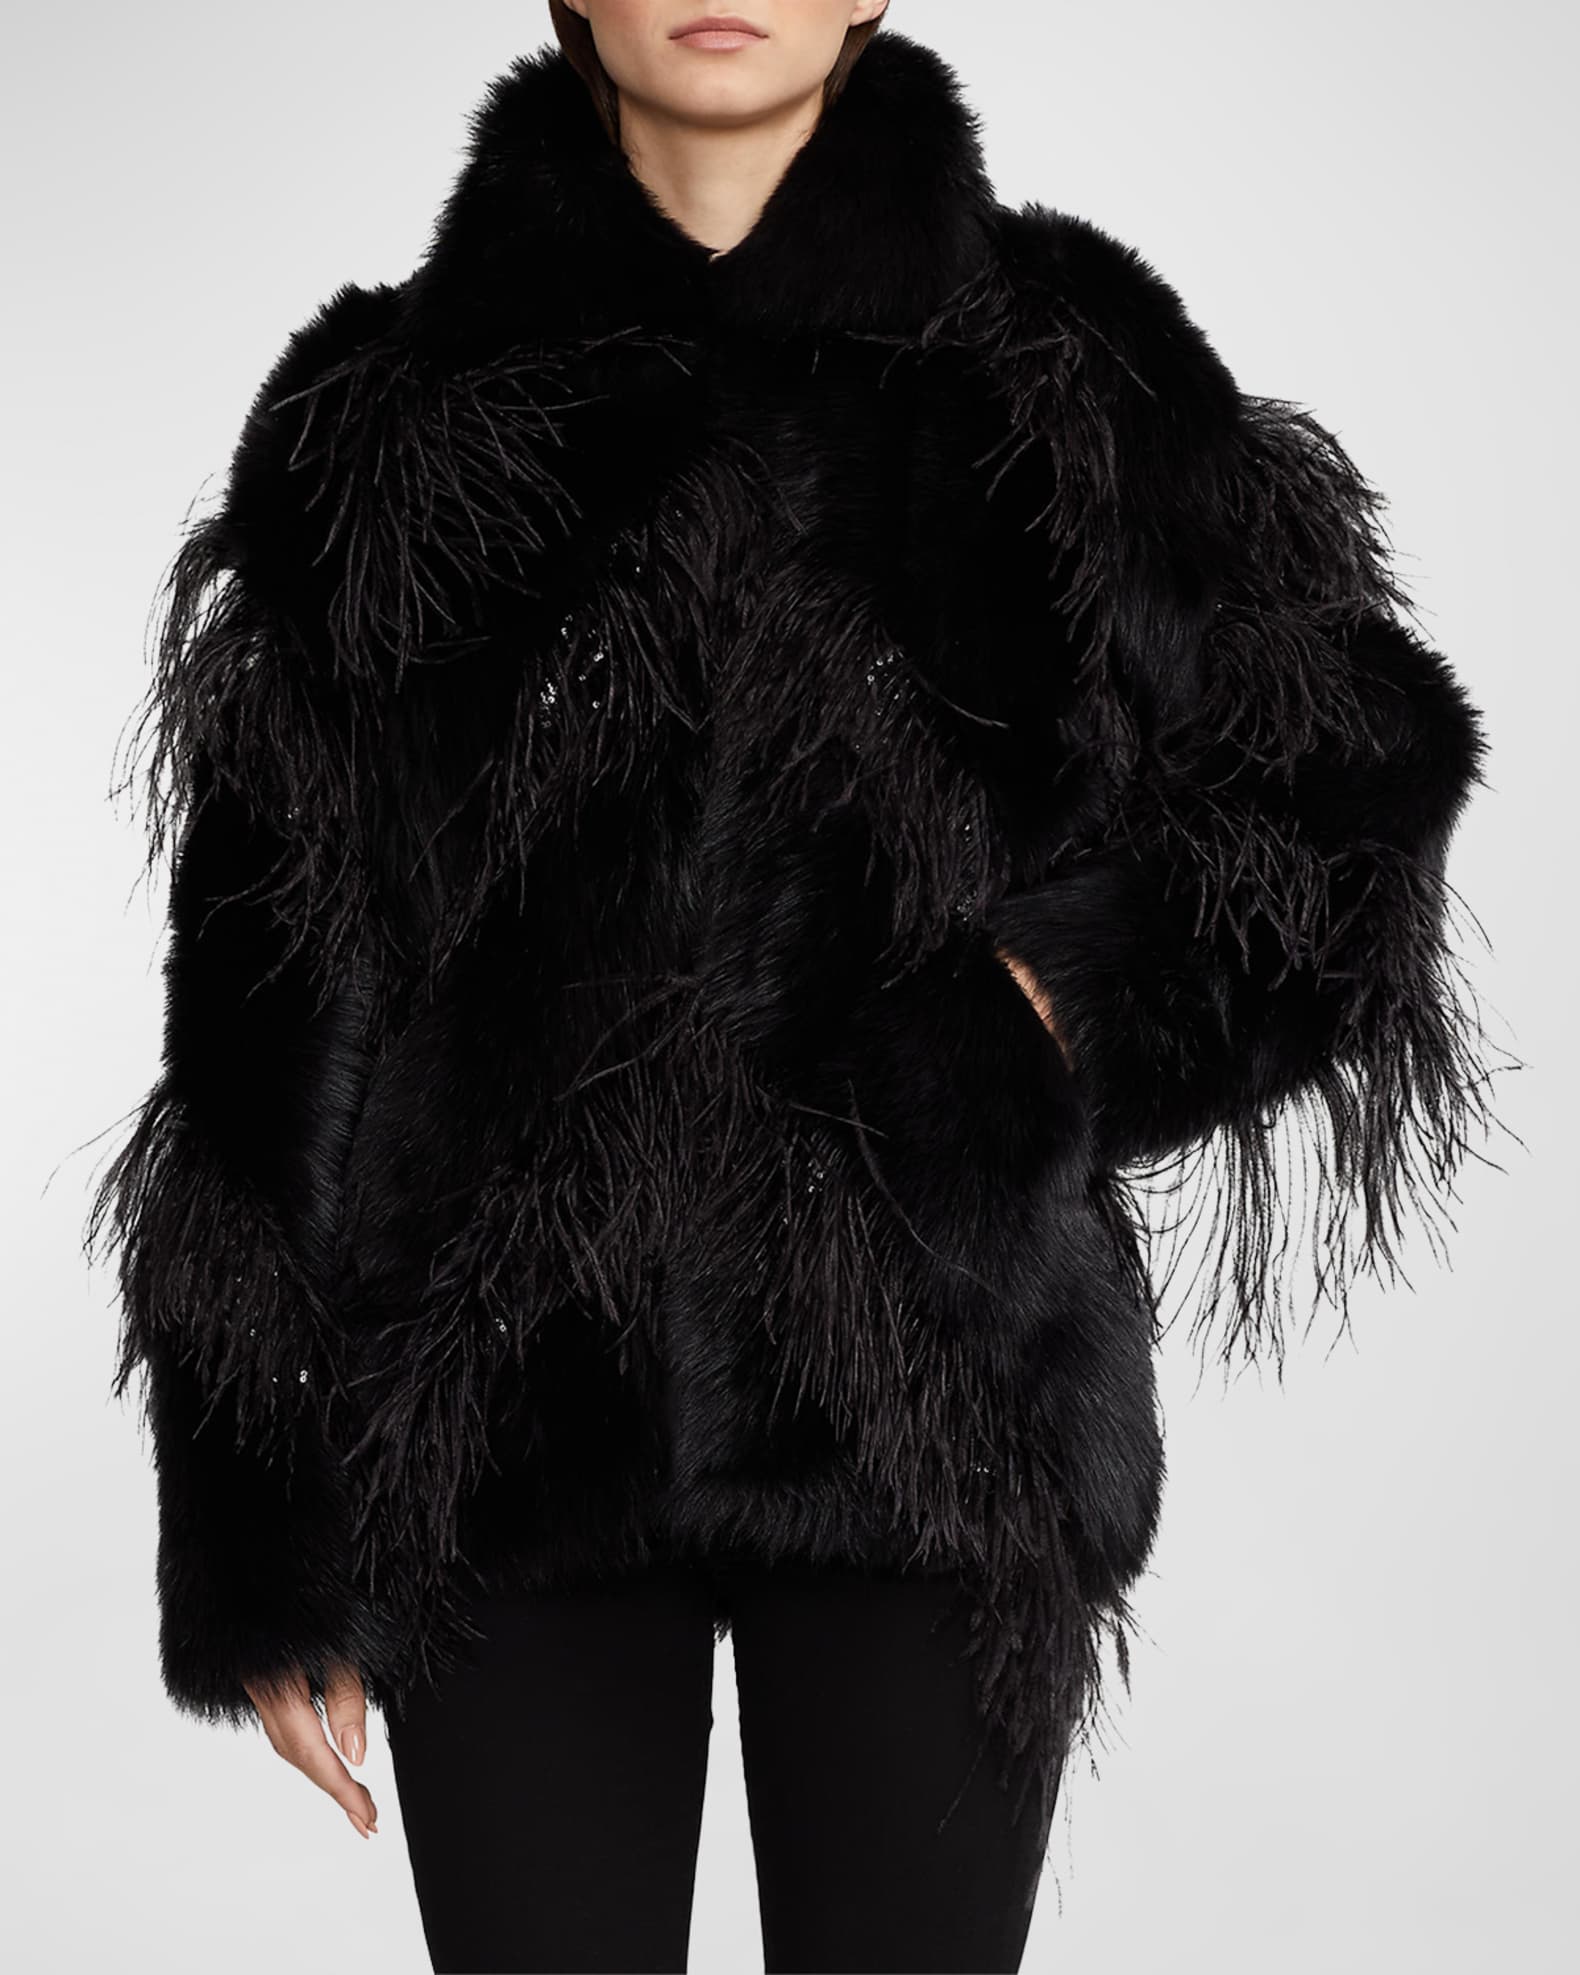 Louis Vuitton Monogram Black Trench Coat with Fox Fur Collar - Size US 4